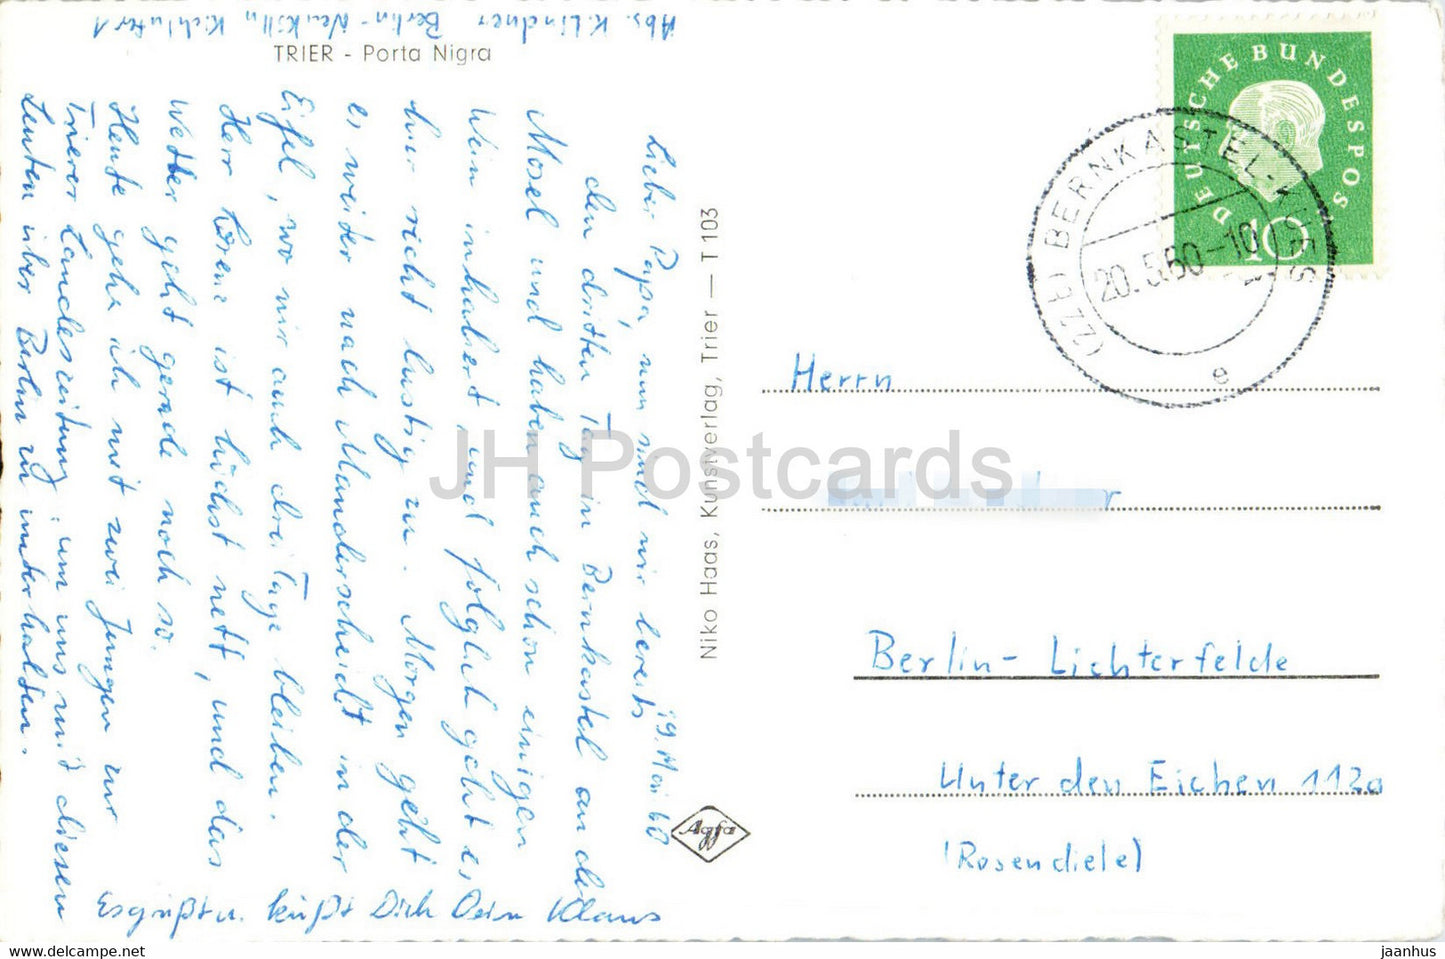 Trier - Porta Nigra - old postcard - 1960 - Germany - used